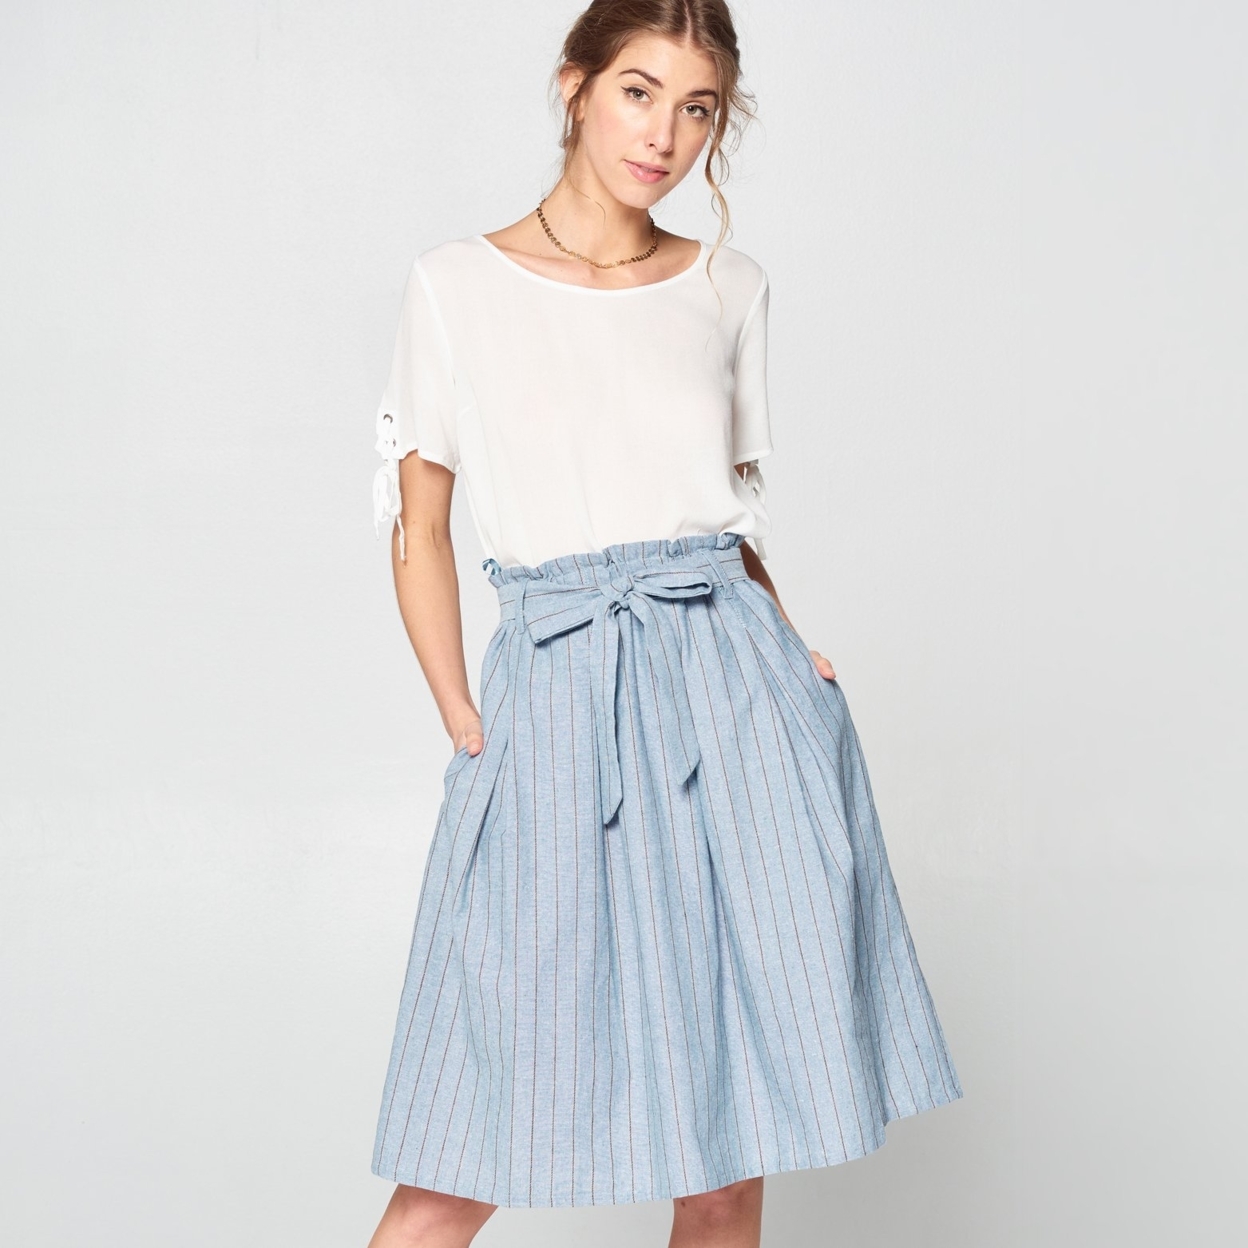 Denim Striped Cotton Skirt - Light Denim, Small (2-6)